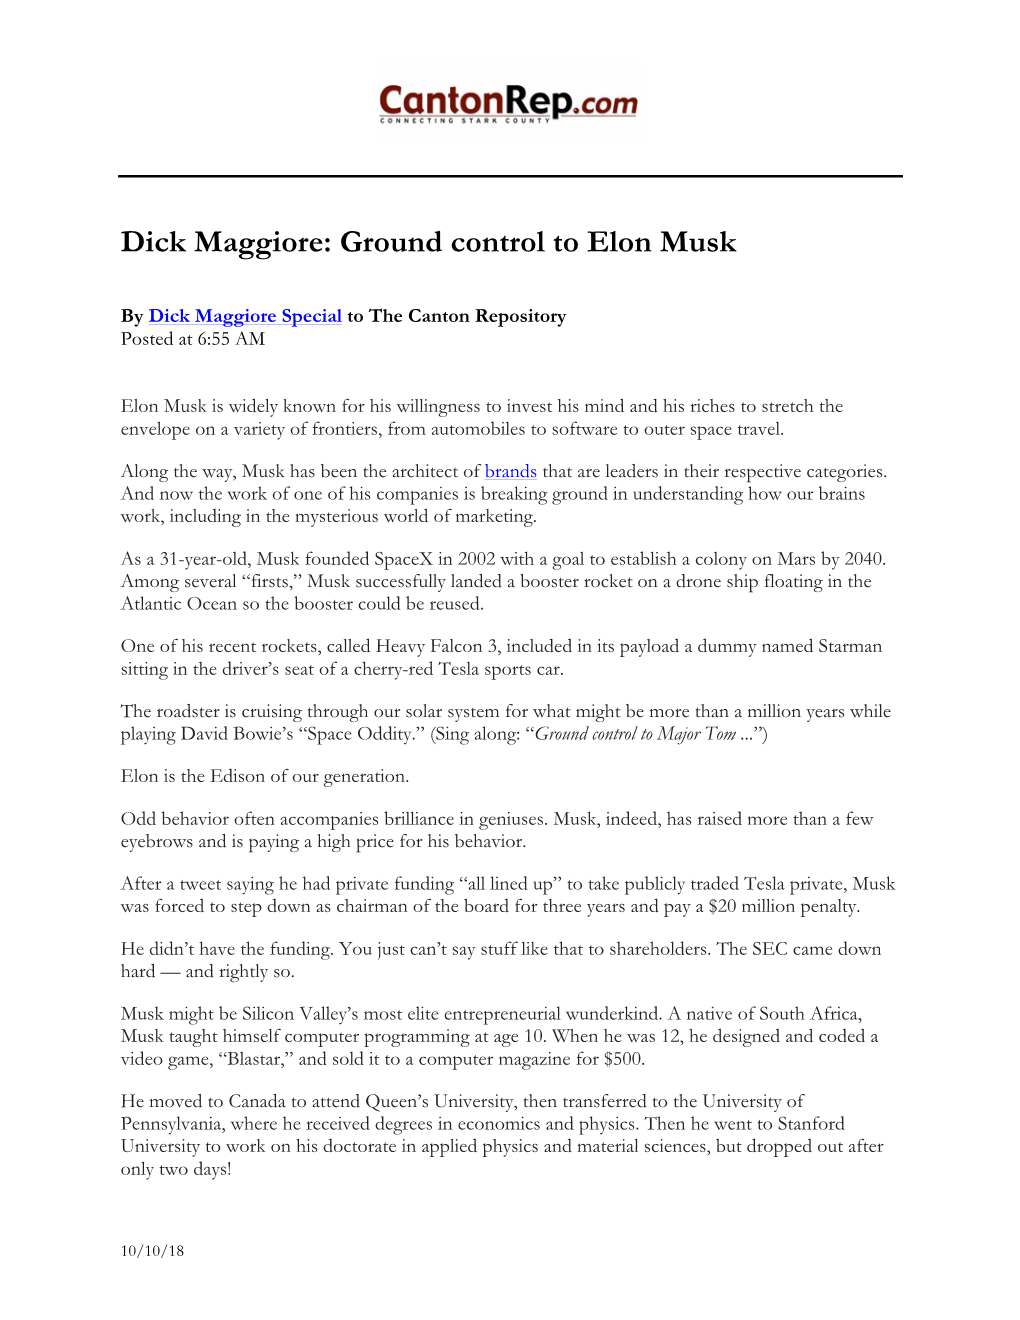 Dick Maggiore: Ground Control to Elon Musk